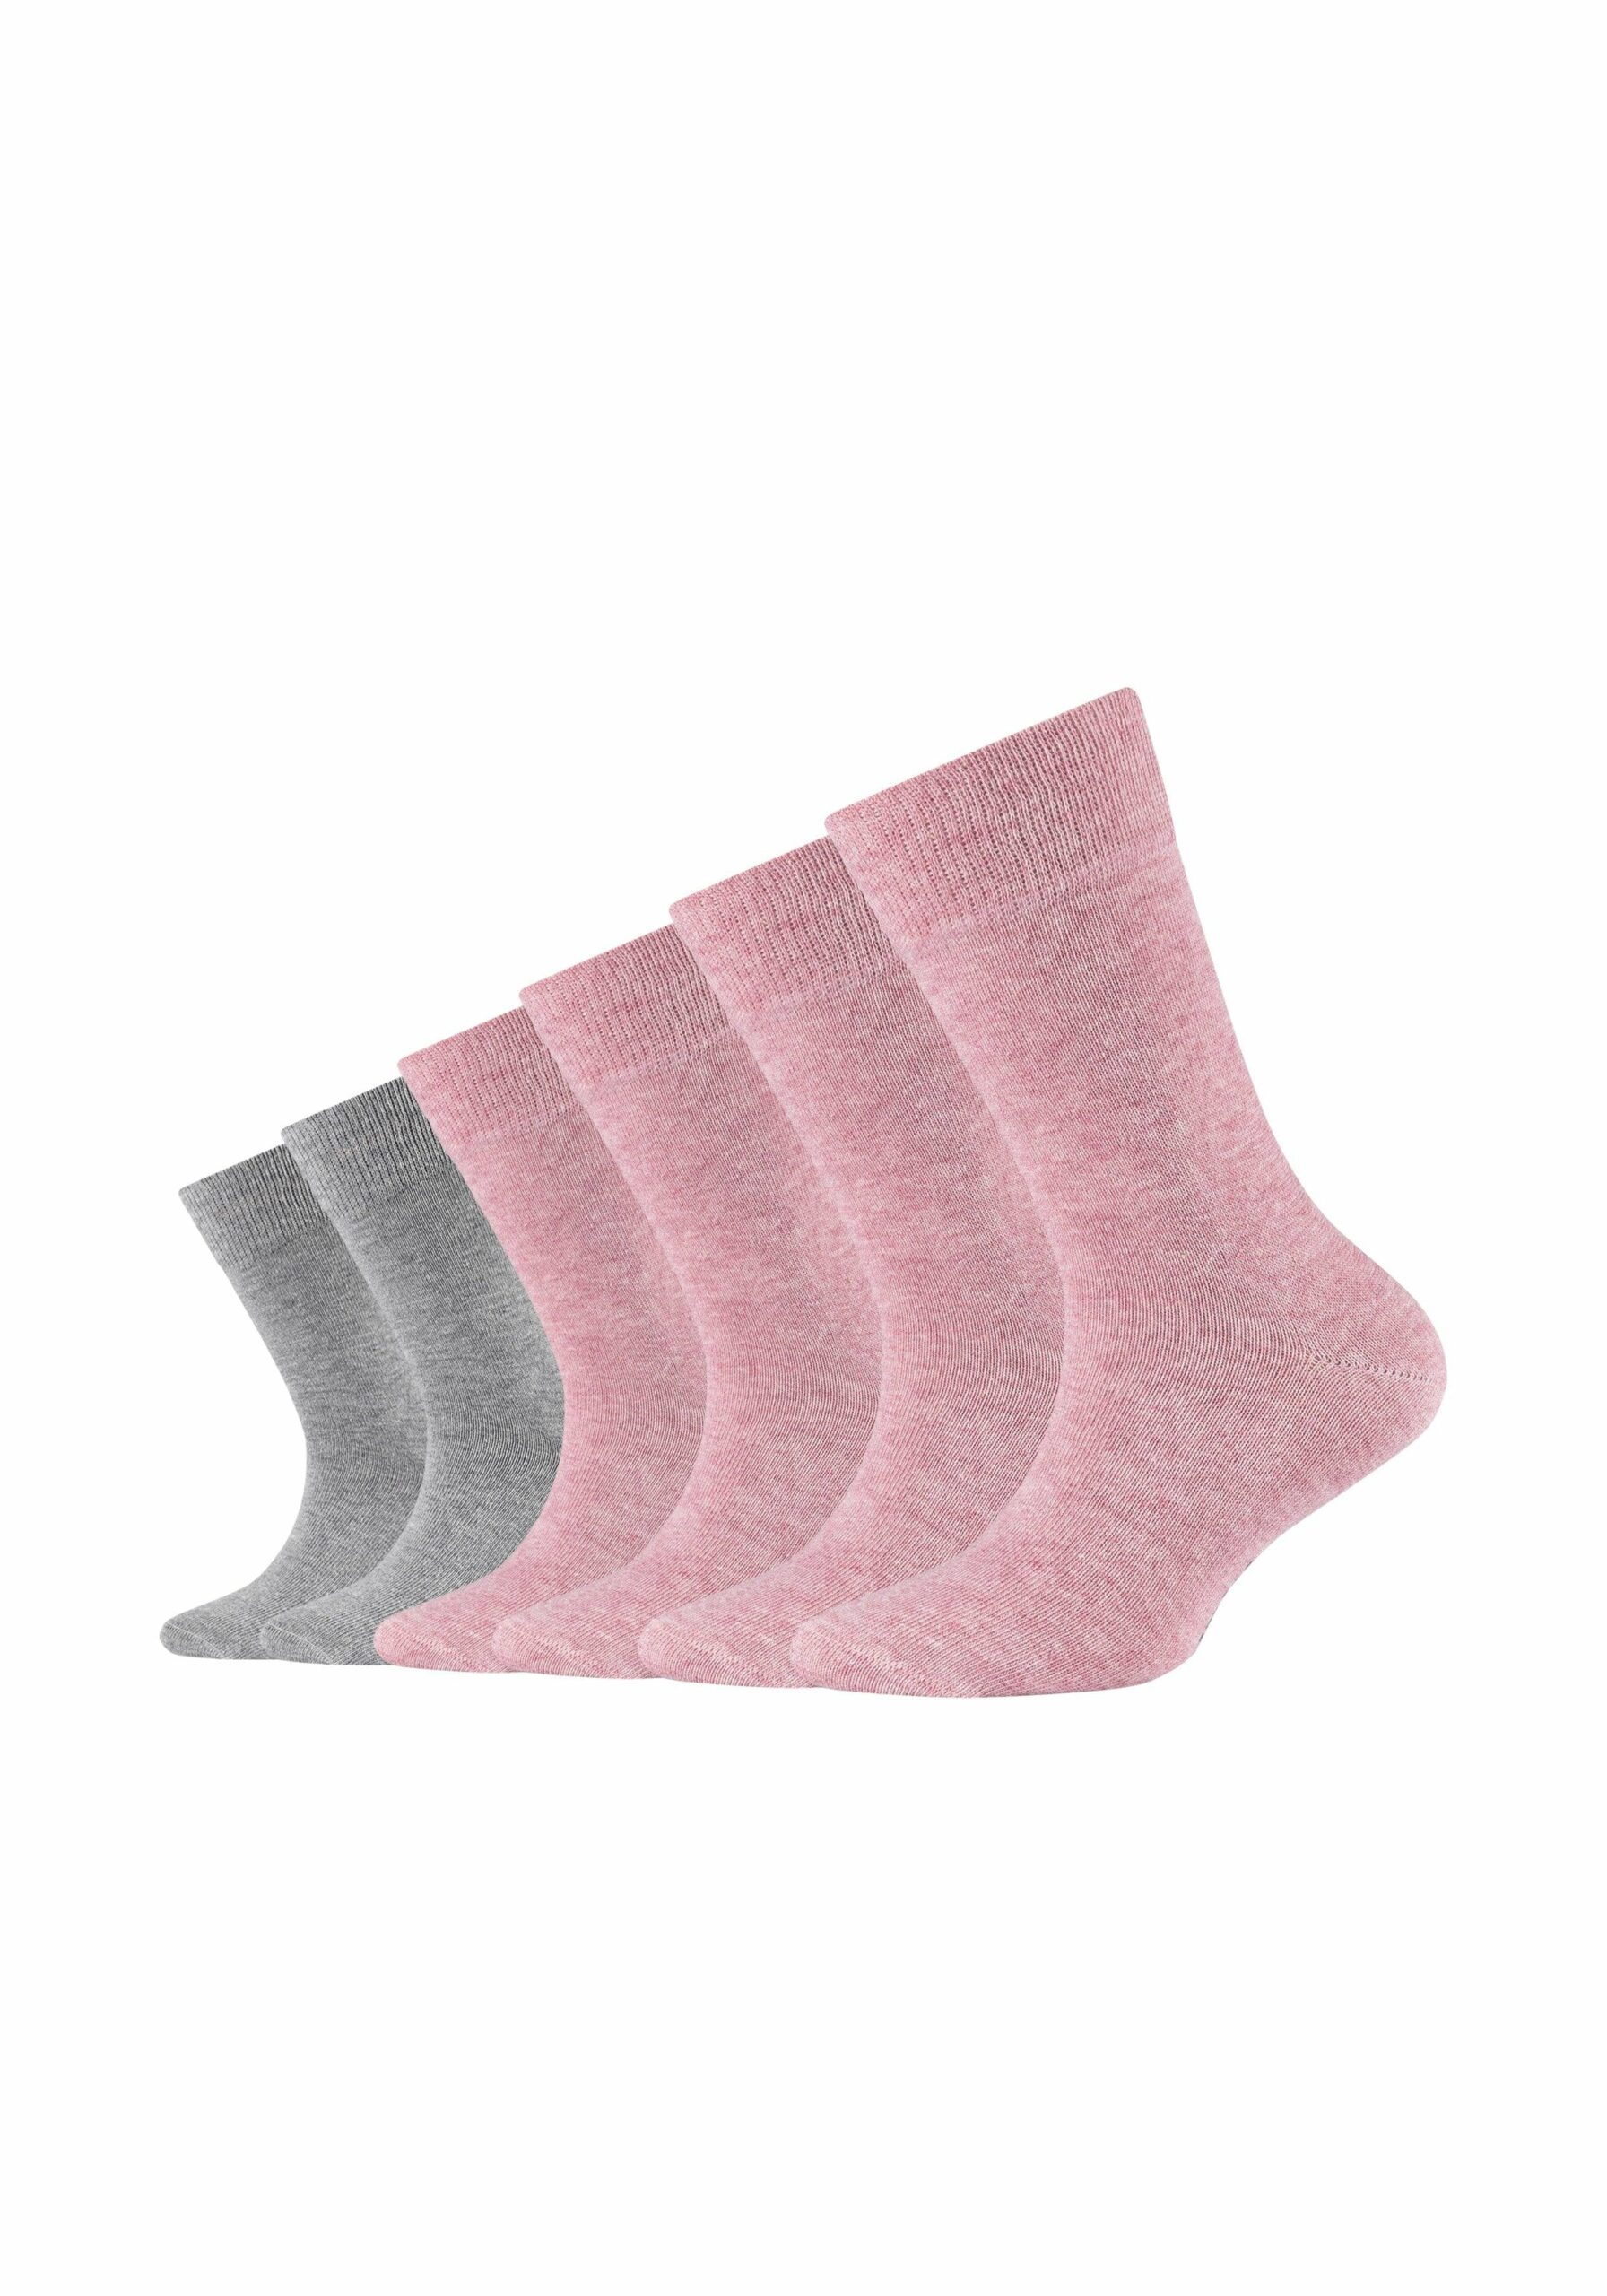 CAMANO Kindersocken ca-soft 6er Pack chalk pink melange kaufen bei